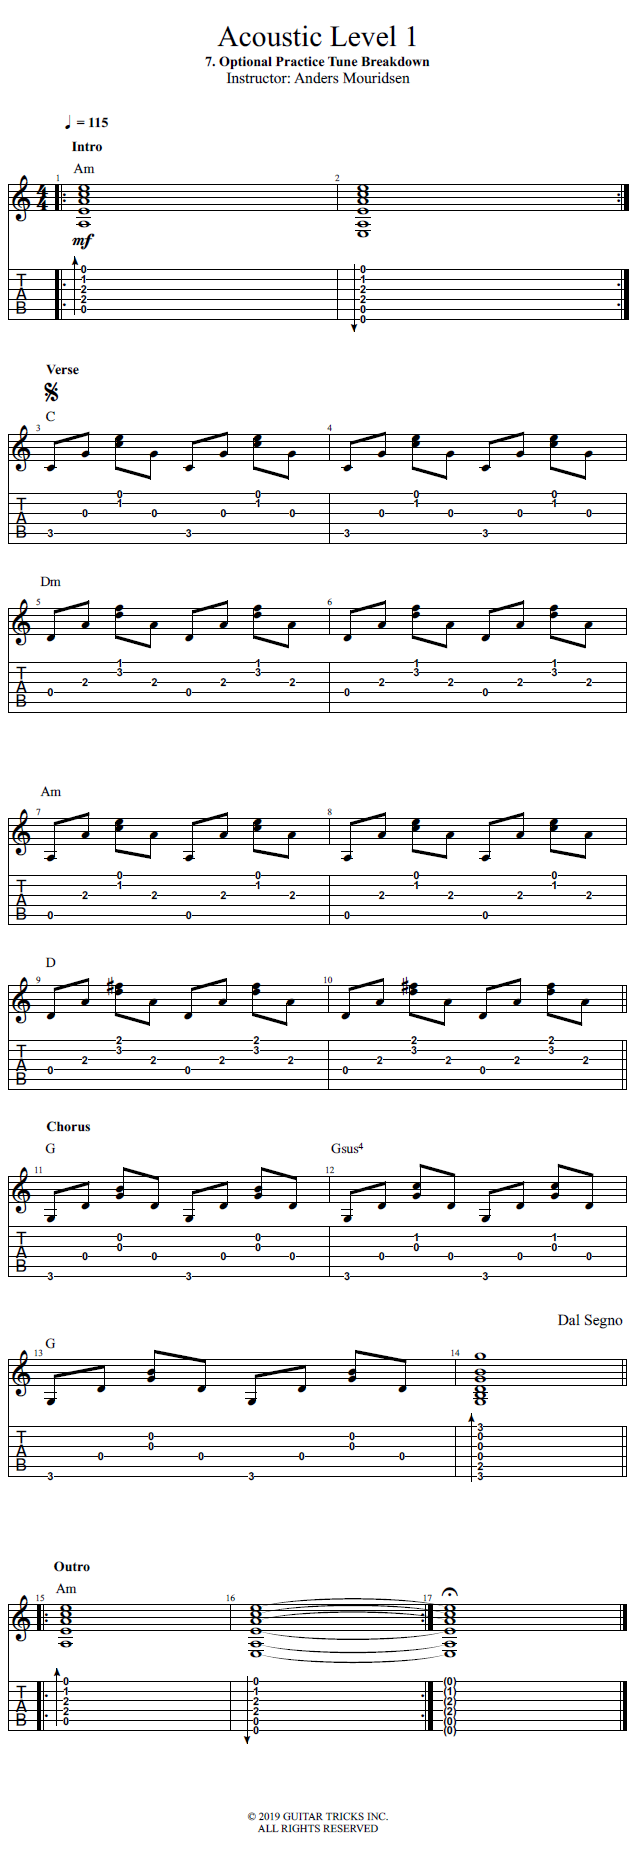 Optional Practice Tune Breakdown song notation